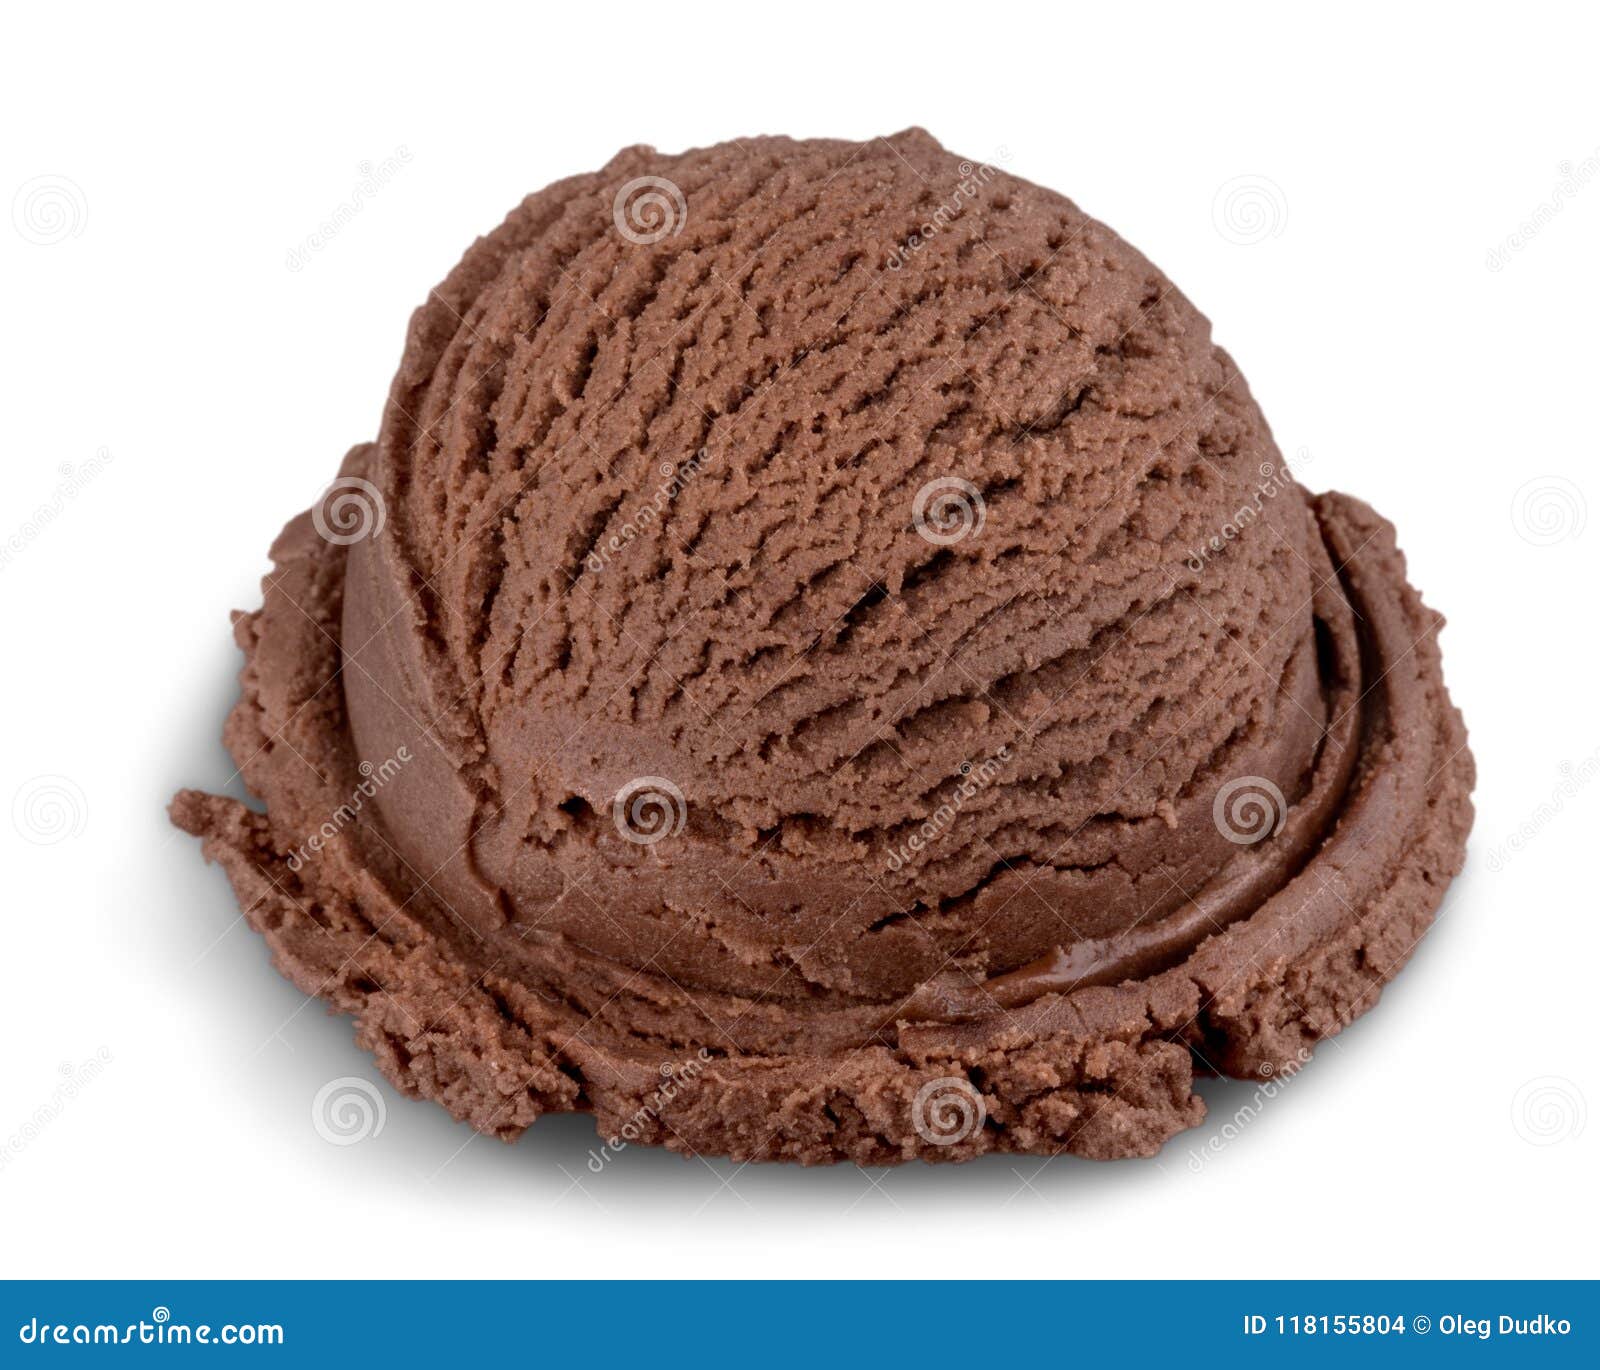 https://thumbs.dreamstime.com/z/chocolate-ice-cream-scoop-ice-cream-ice-cream-scoop-isolated-delicious-indulgence-dessert-sweet-118155804.jpg